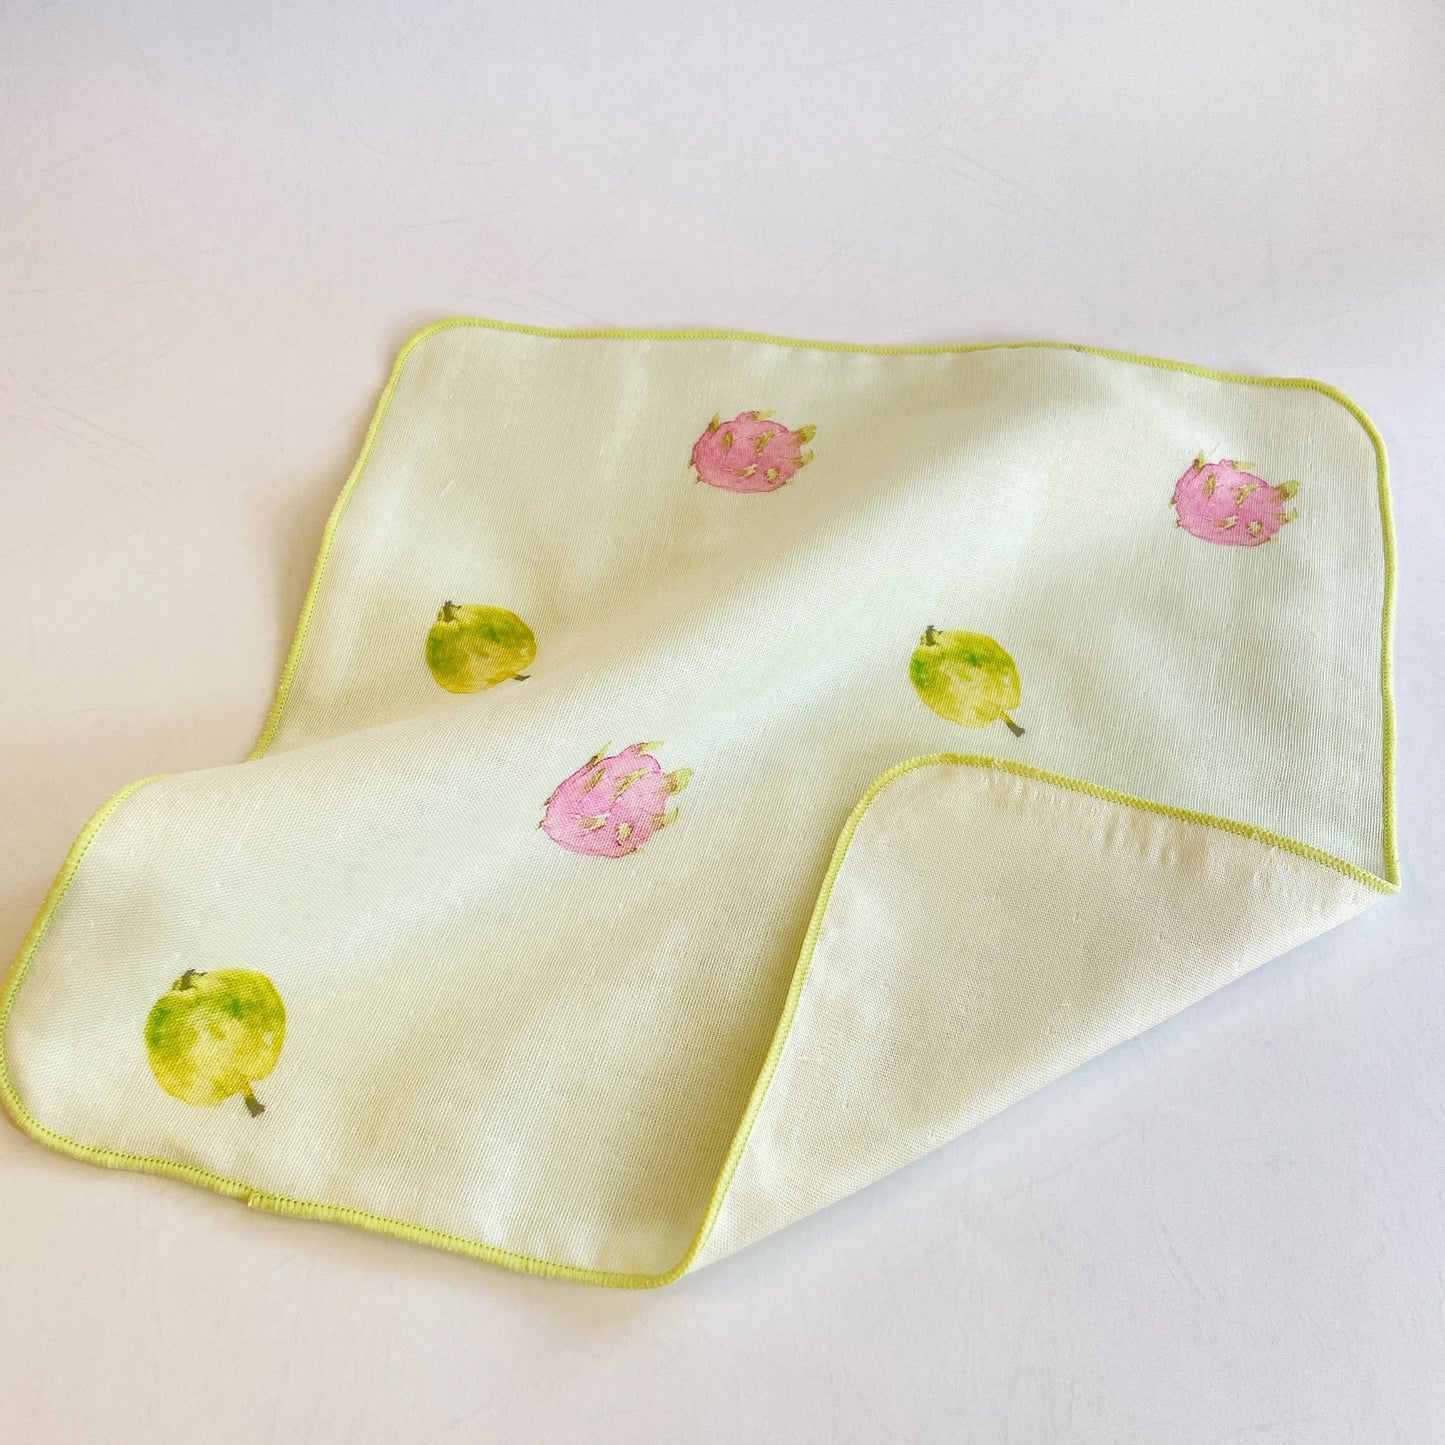 New❗️Baby and Kid Gauze Handkerchiefs 2pcs set (Taiwan Animals/ Fruits)